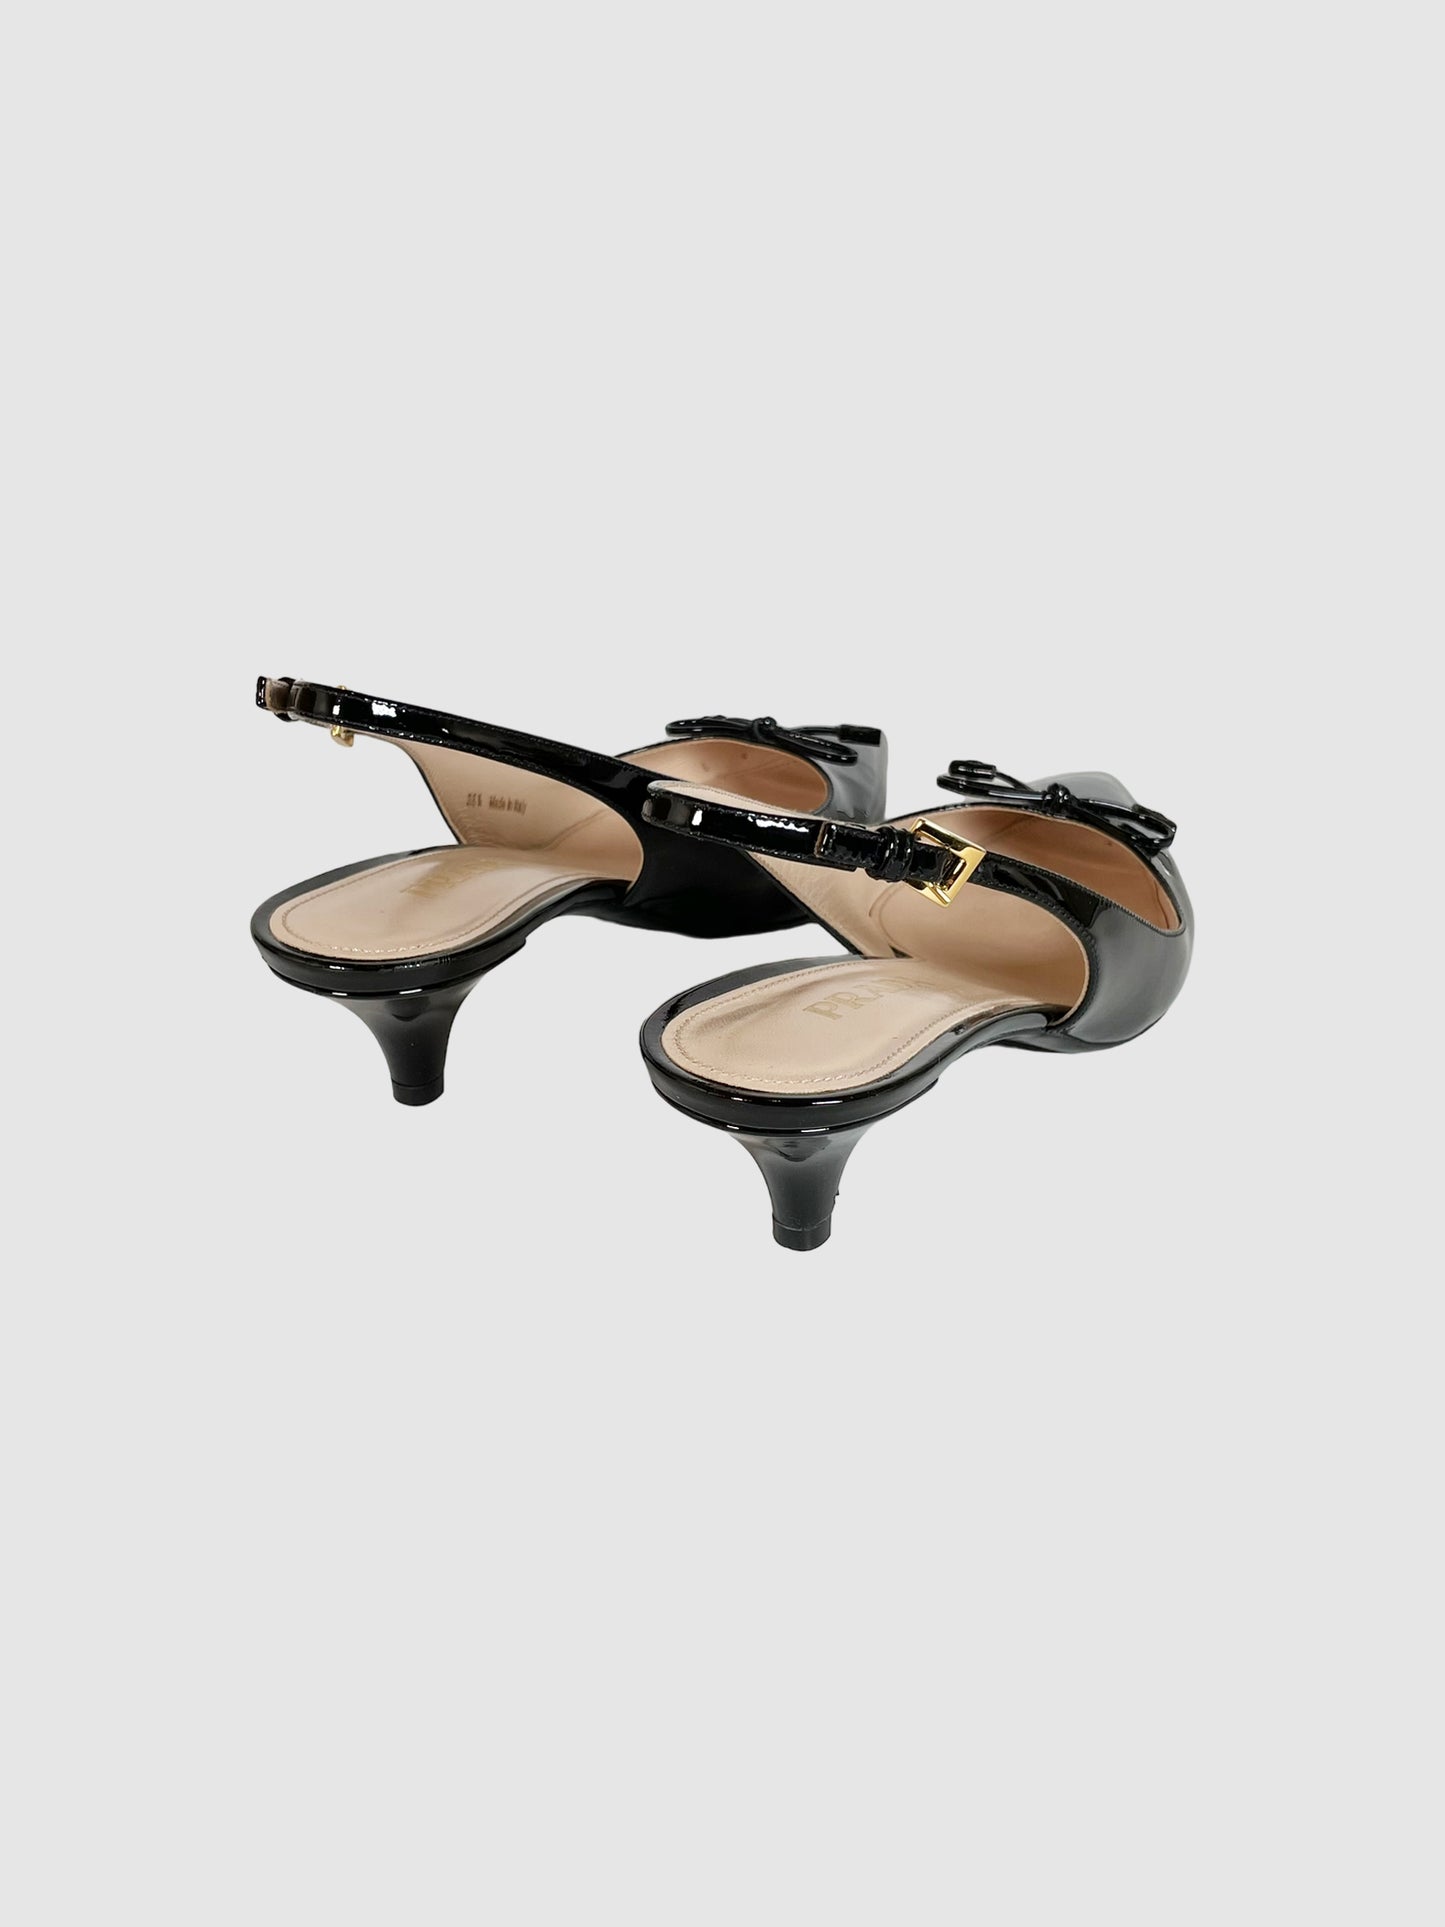 Prada Patent Leather Slingback Heels - Size 38.5